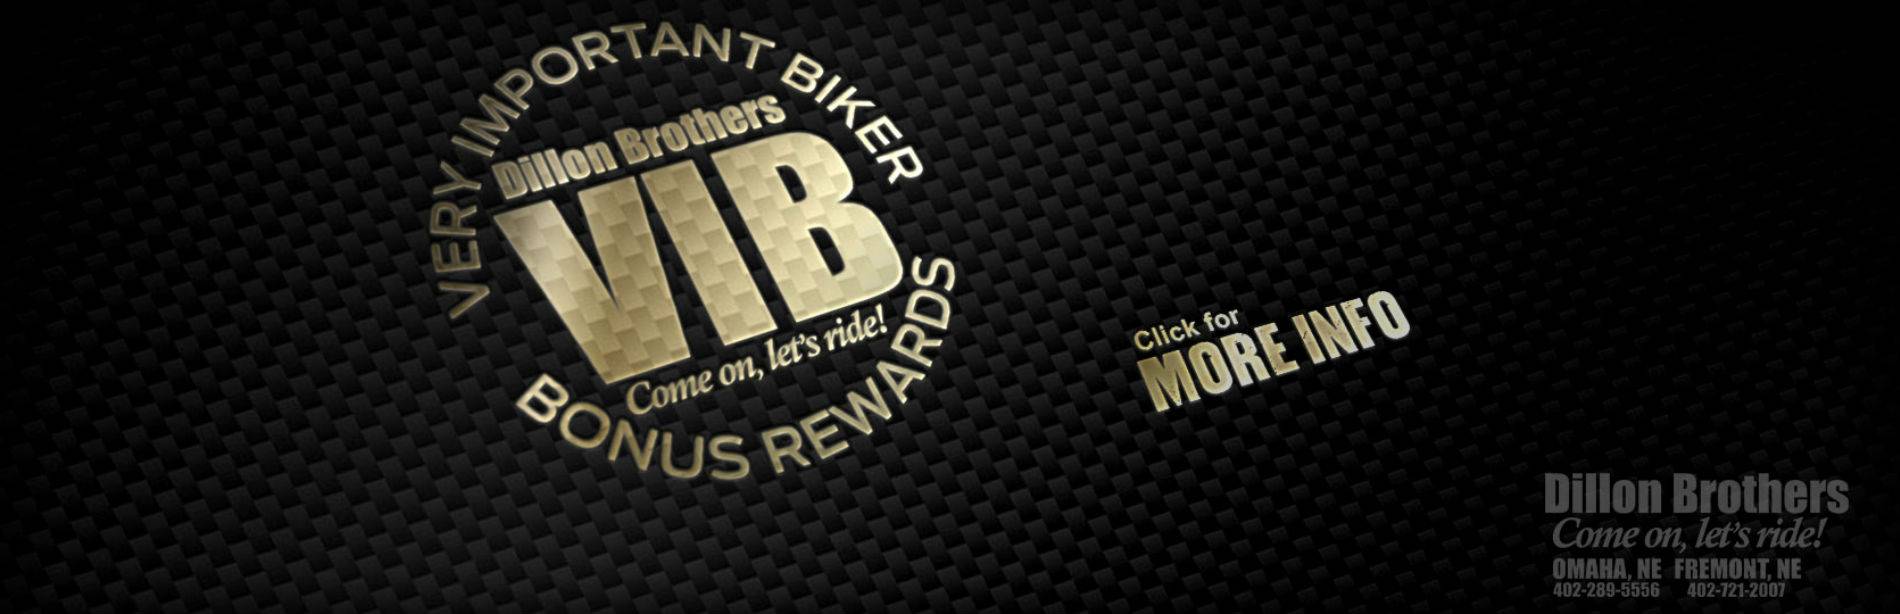 VIB Rewards Banner